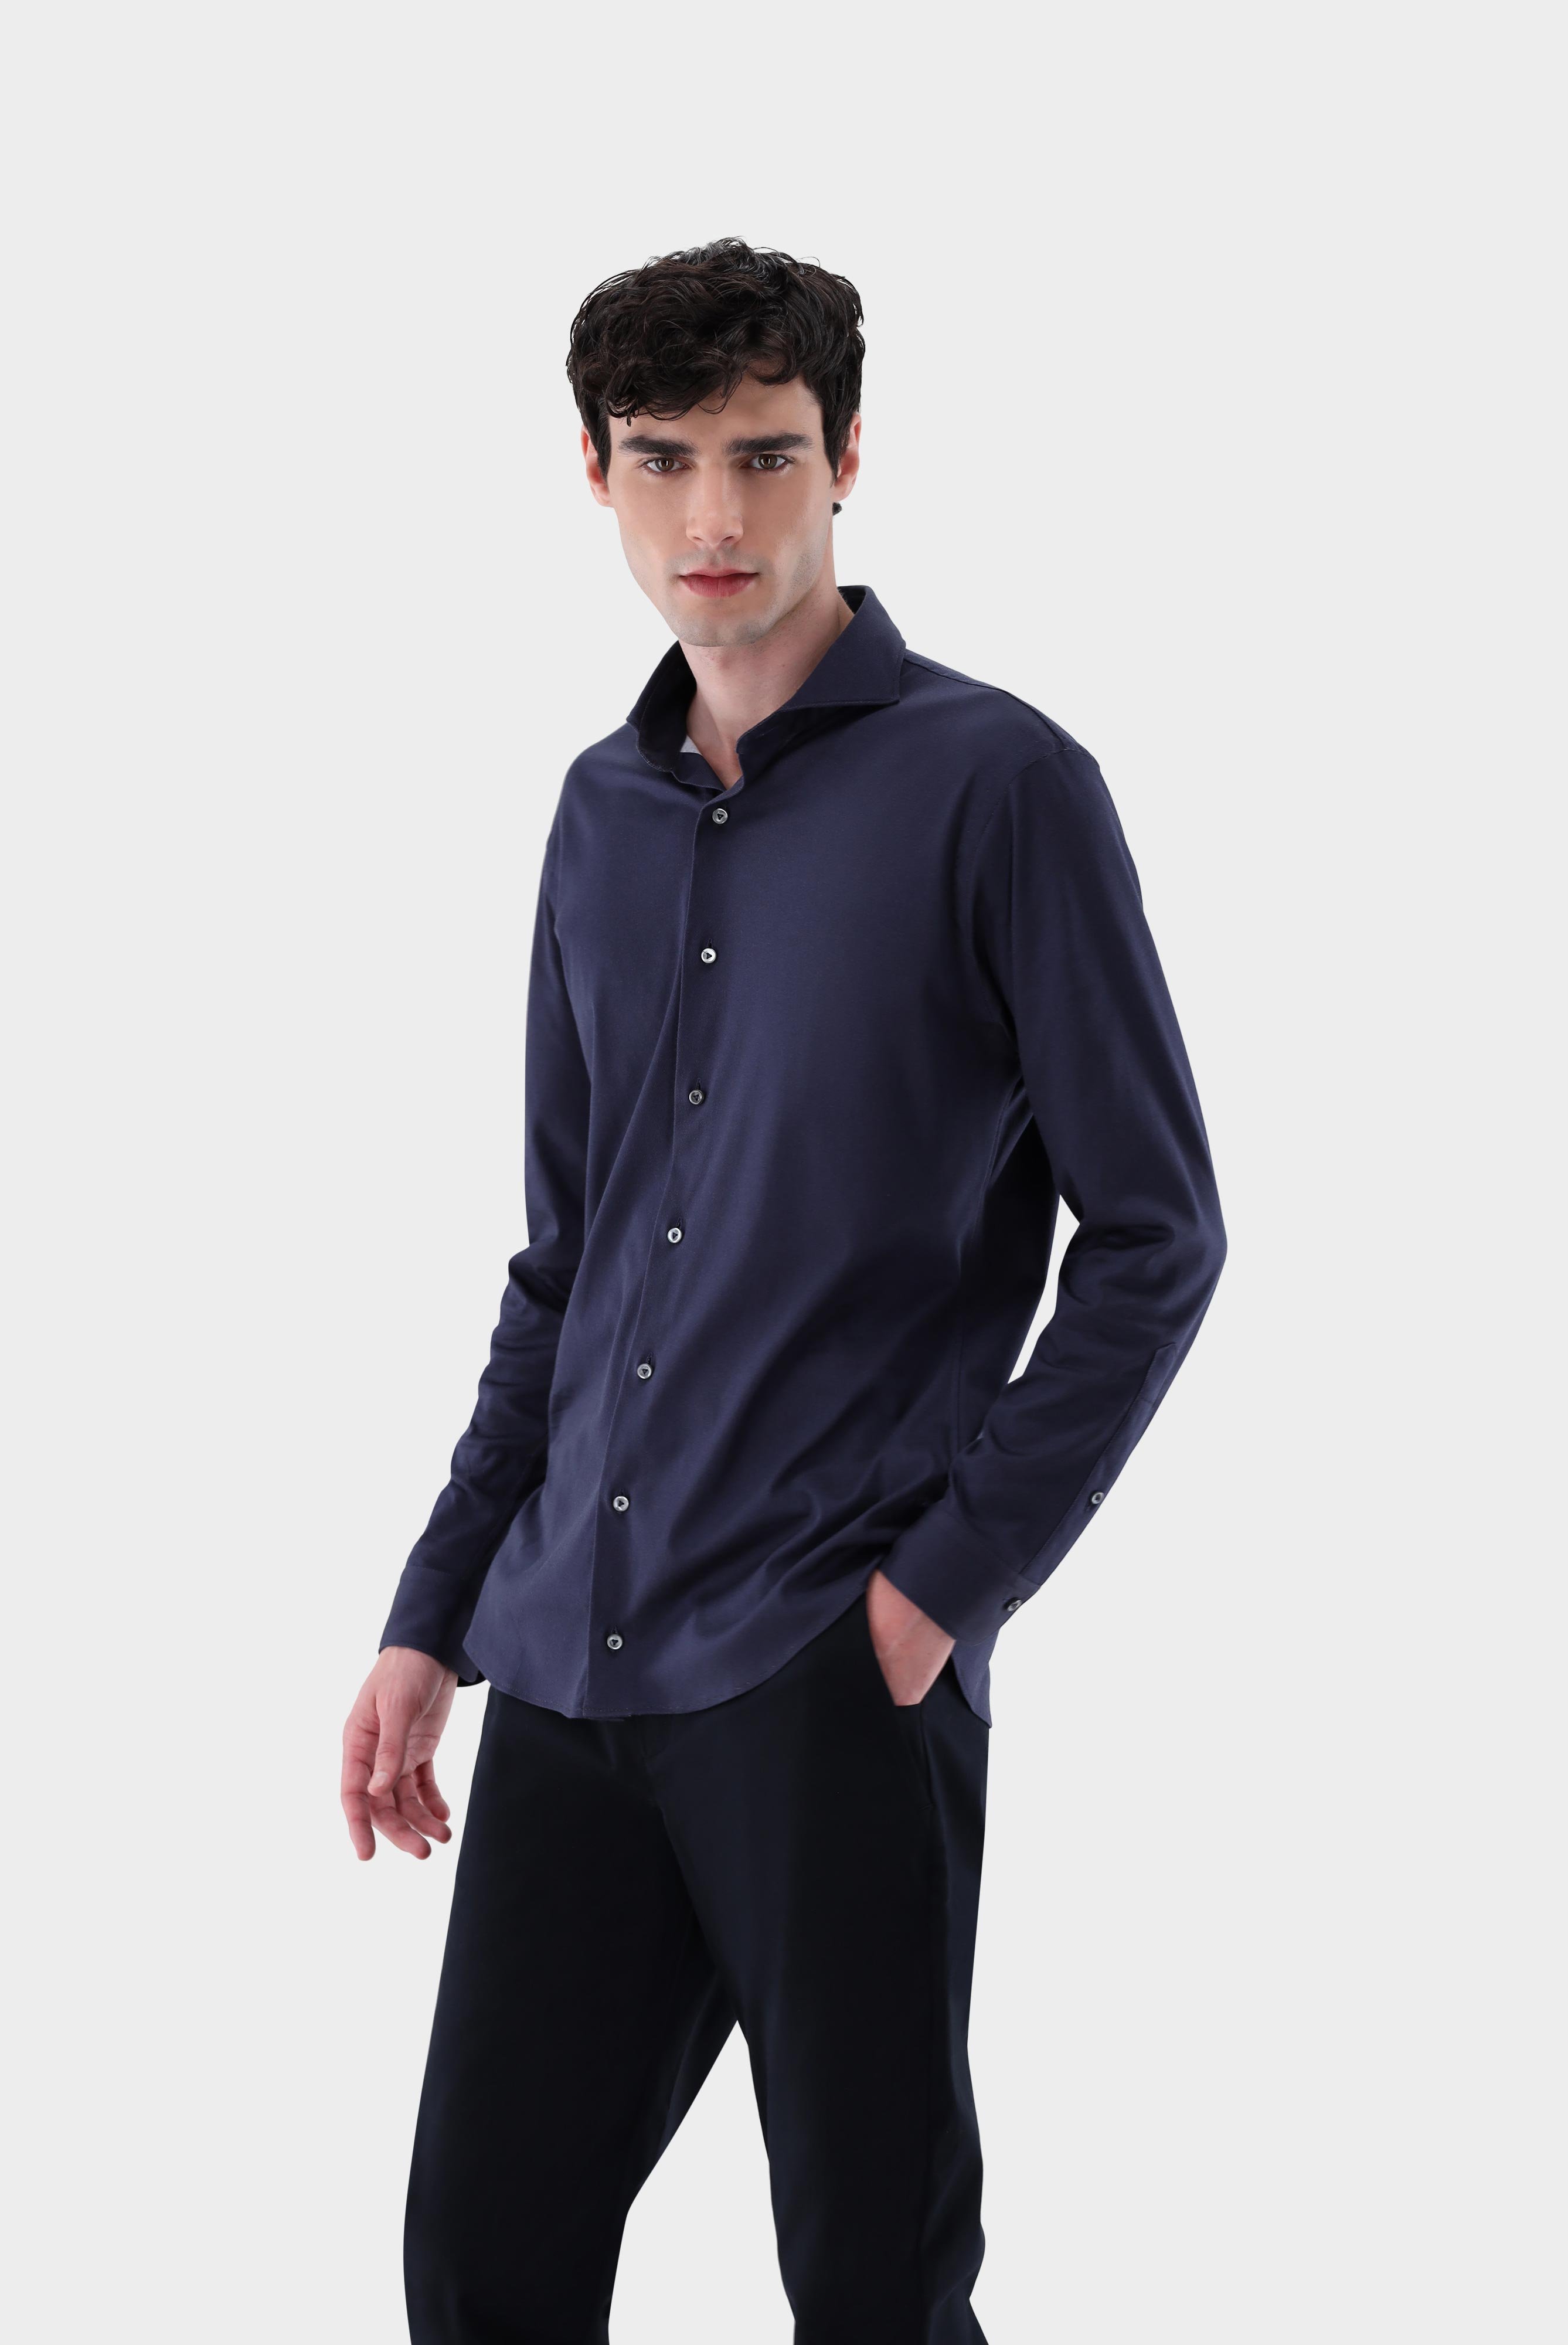 Casual Hemden+Jersey Hemd mit Twill Druck Tailor Fit+20.1683.UC.187749.690.XL